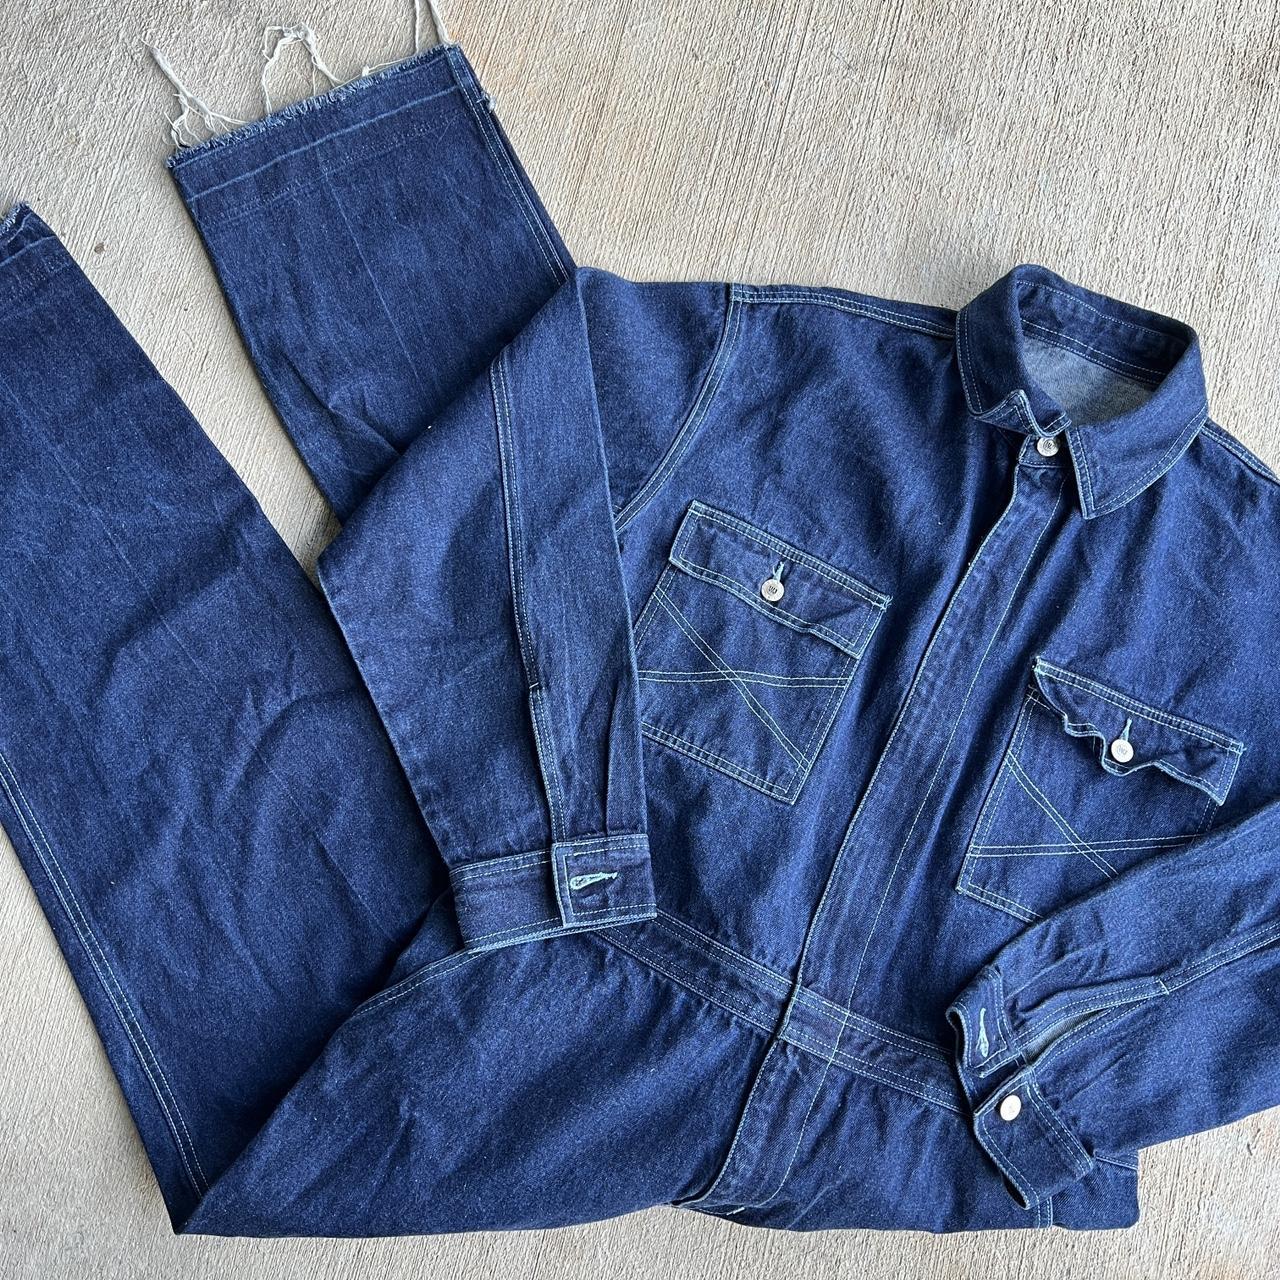 Carpenter Denim Jeans - L / Navy